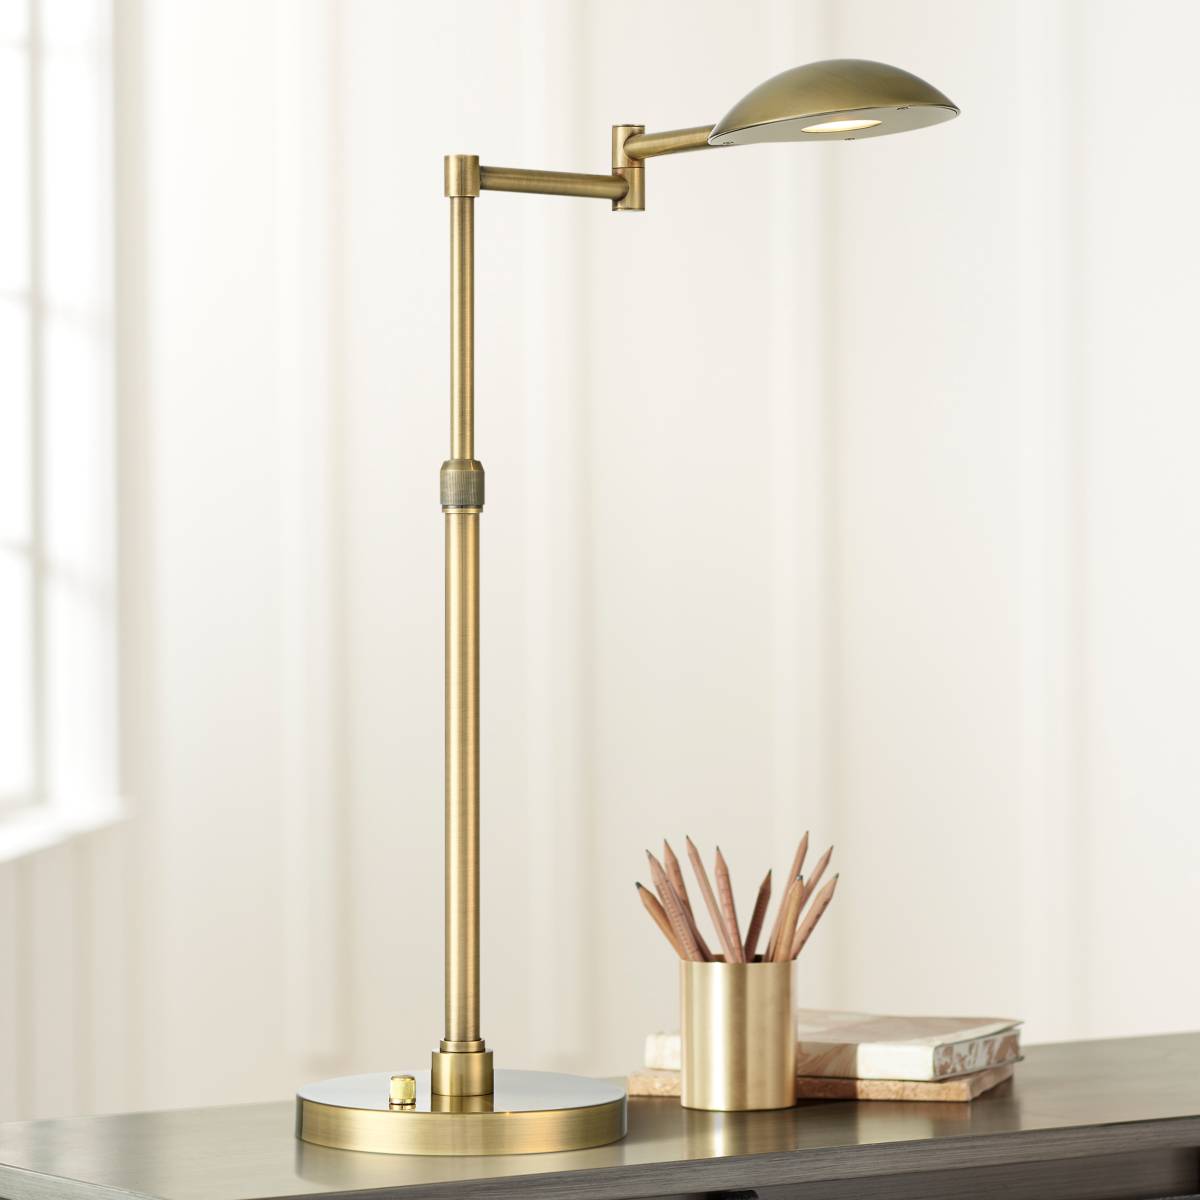 Brass - Antique Brass, Possini Euro Design, Swing Arm Table Lamps